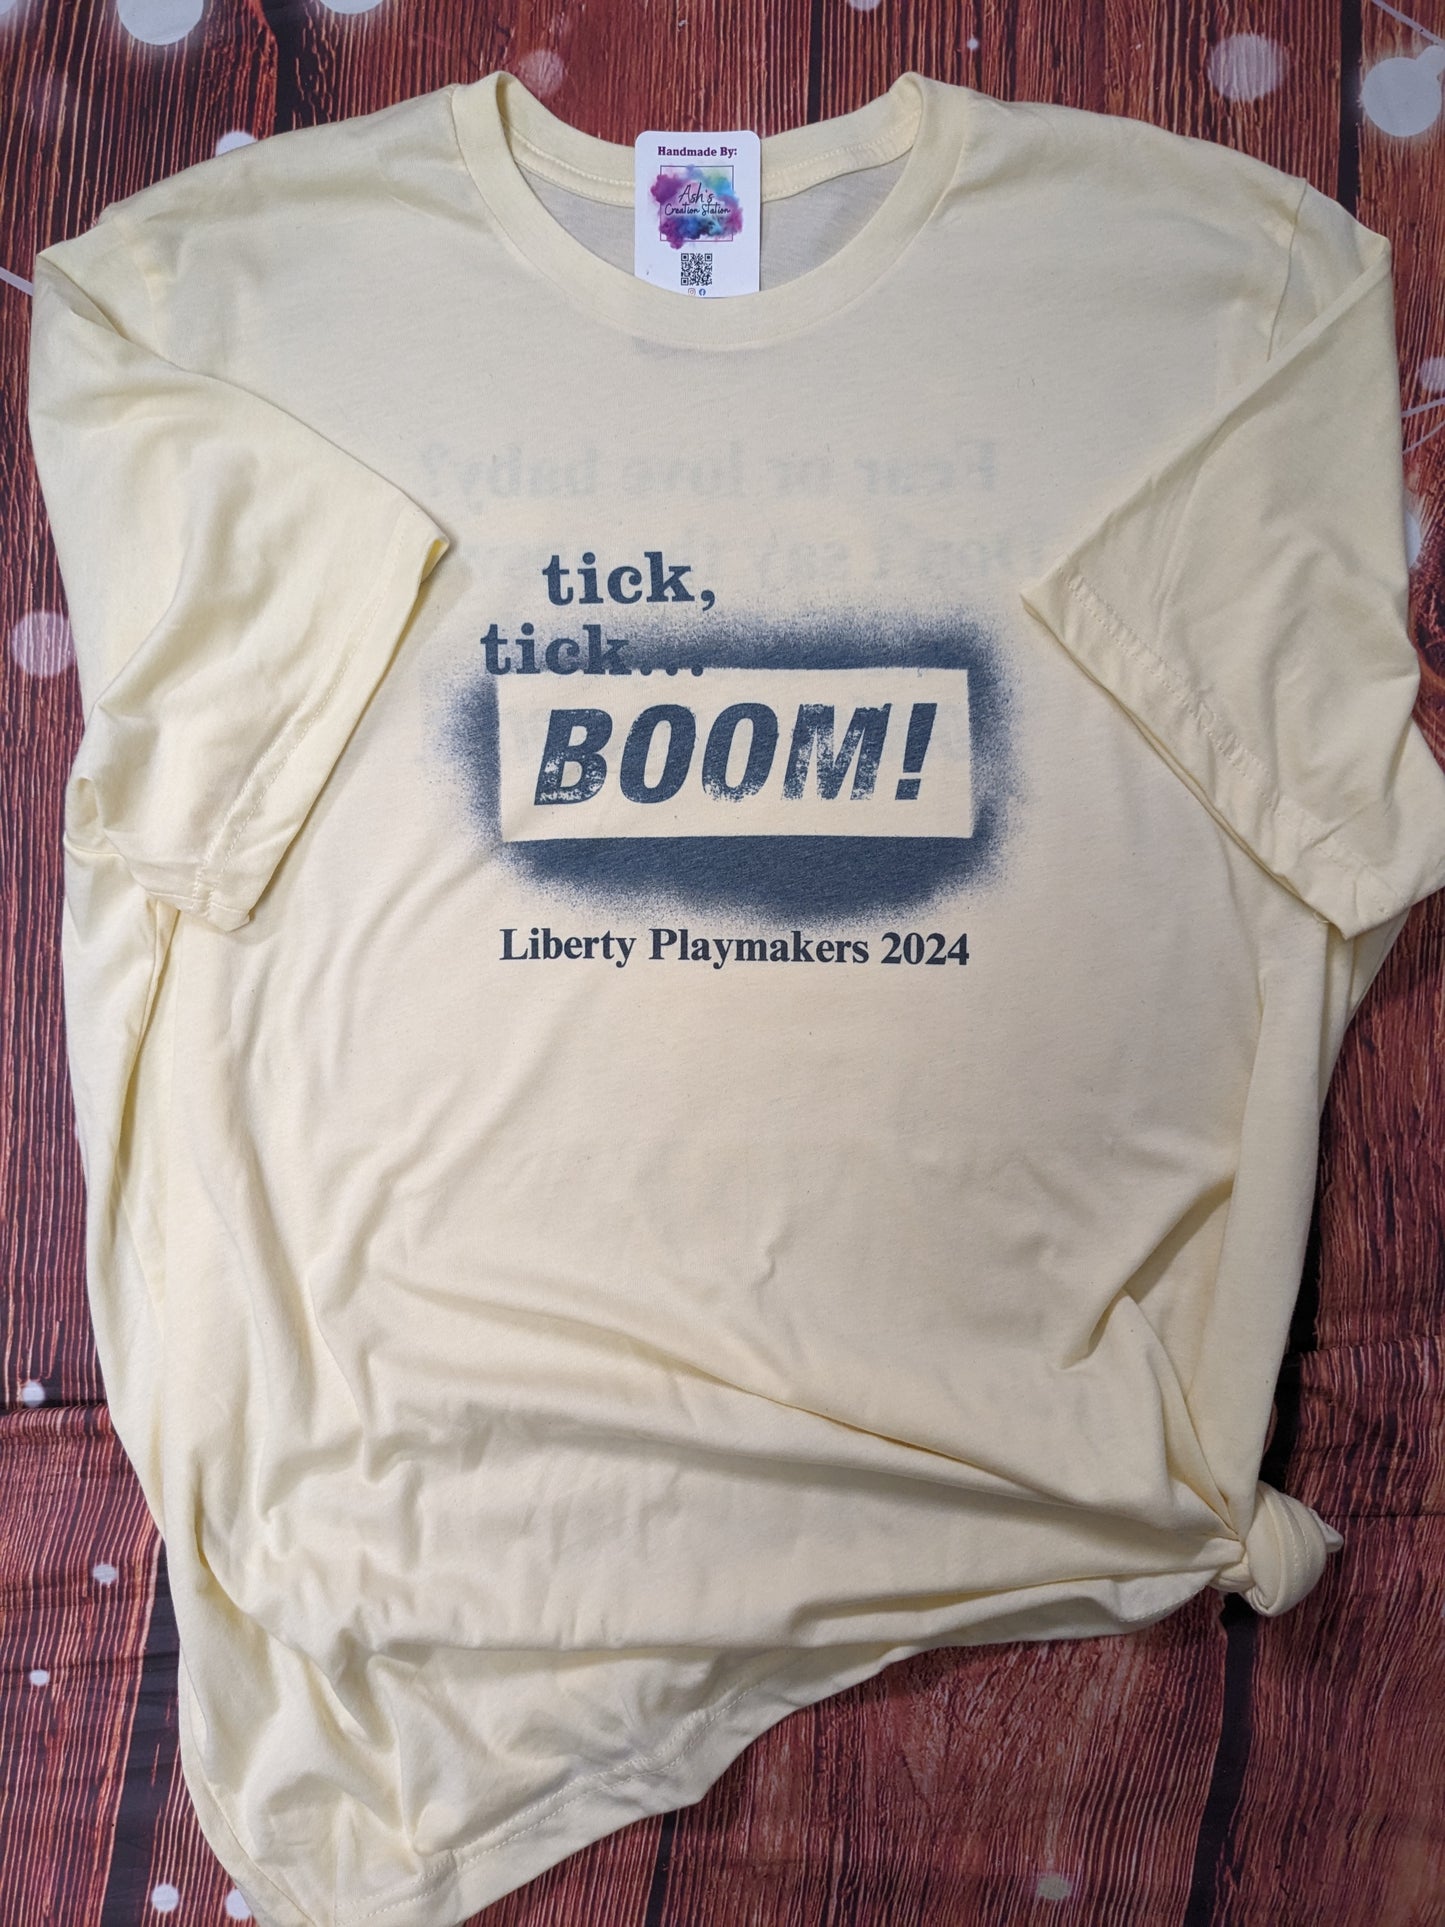 Liberty HS Playmakers: tick tick BOOM! Show Shirt